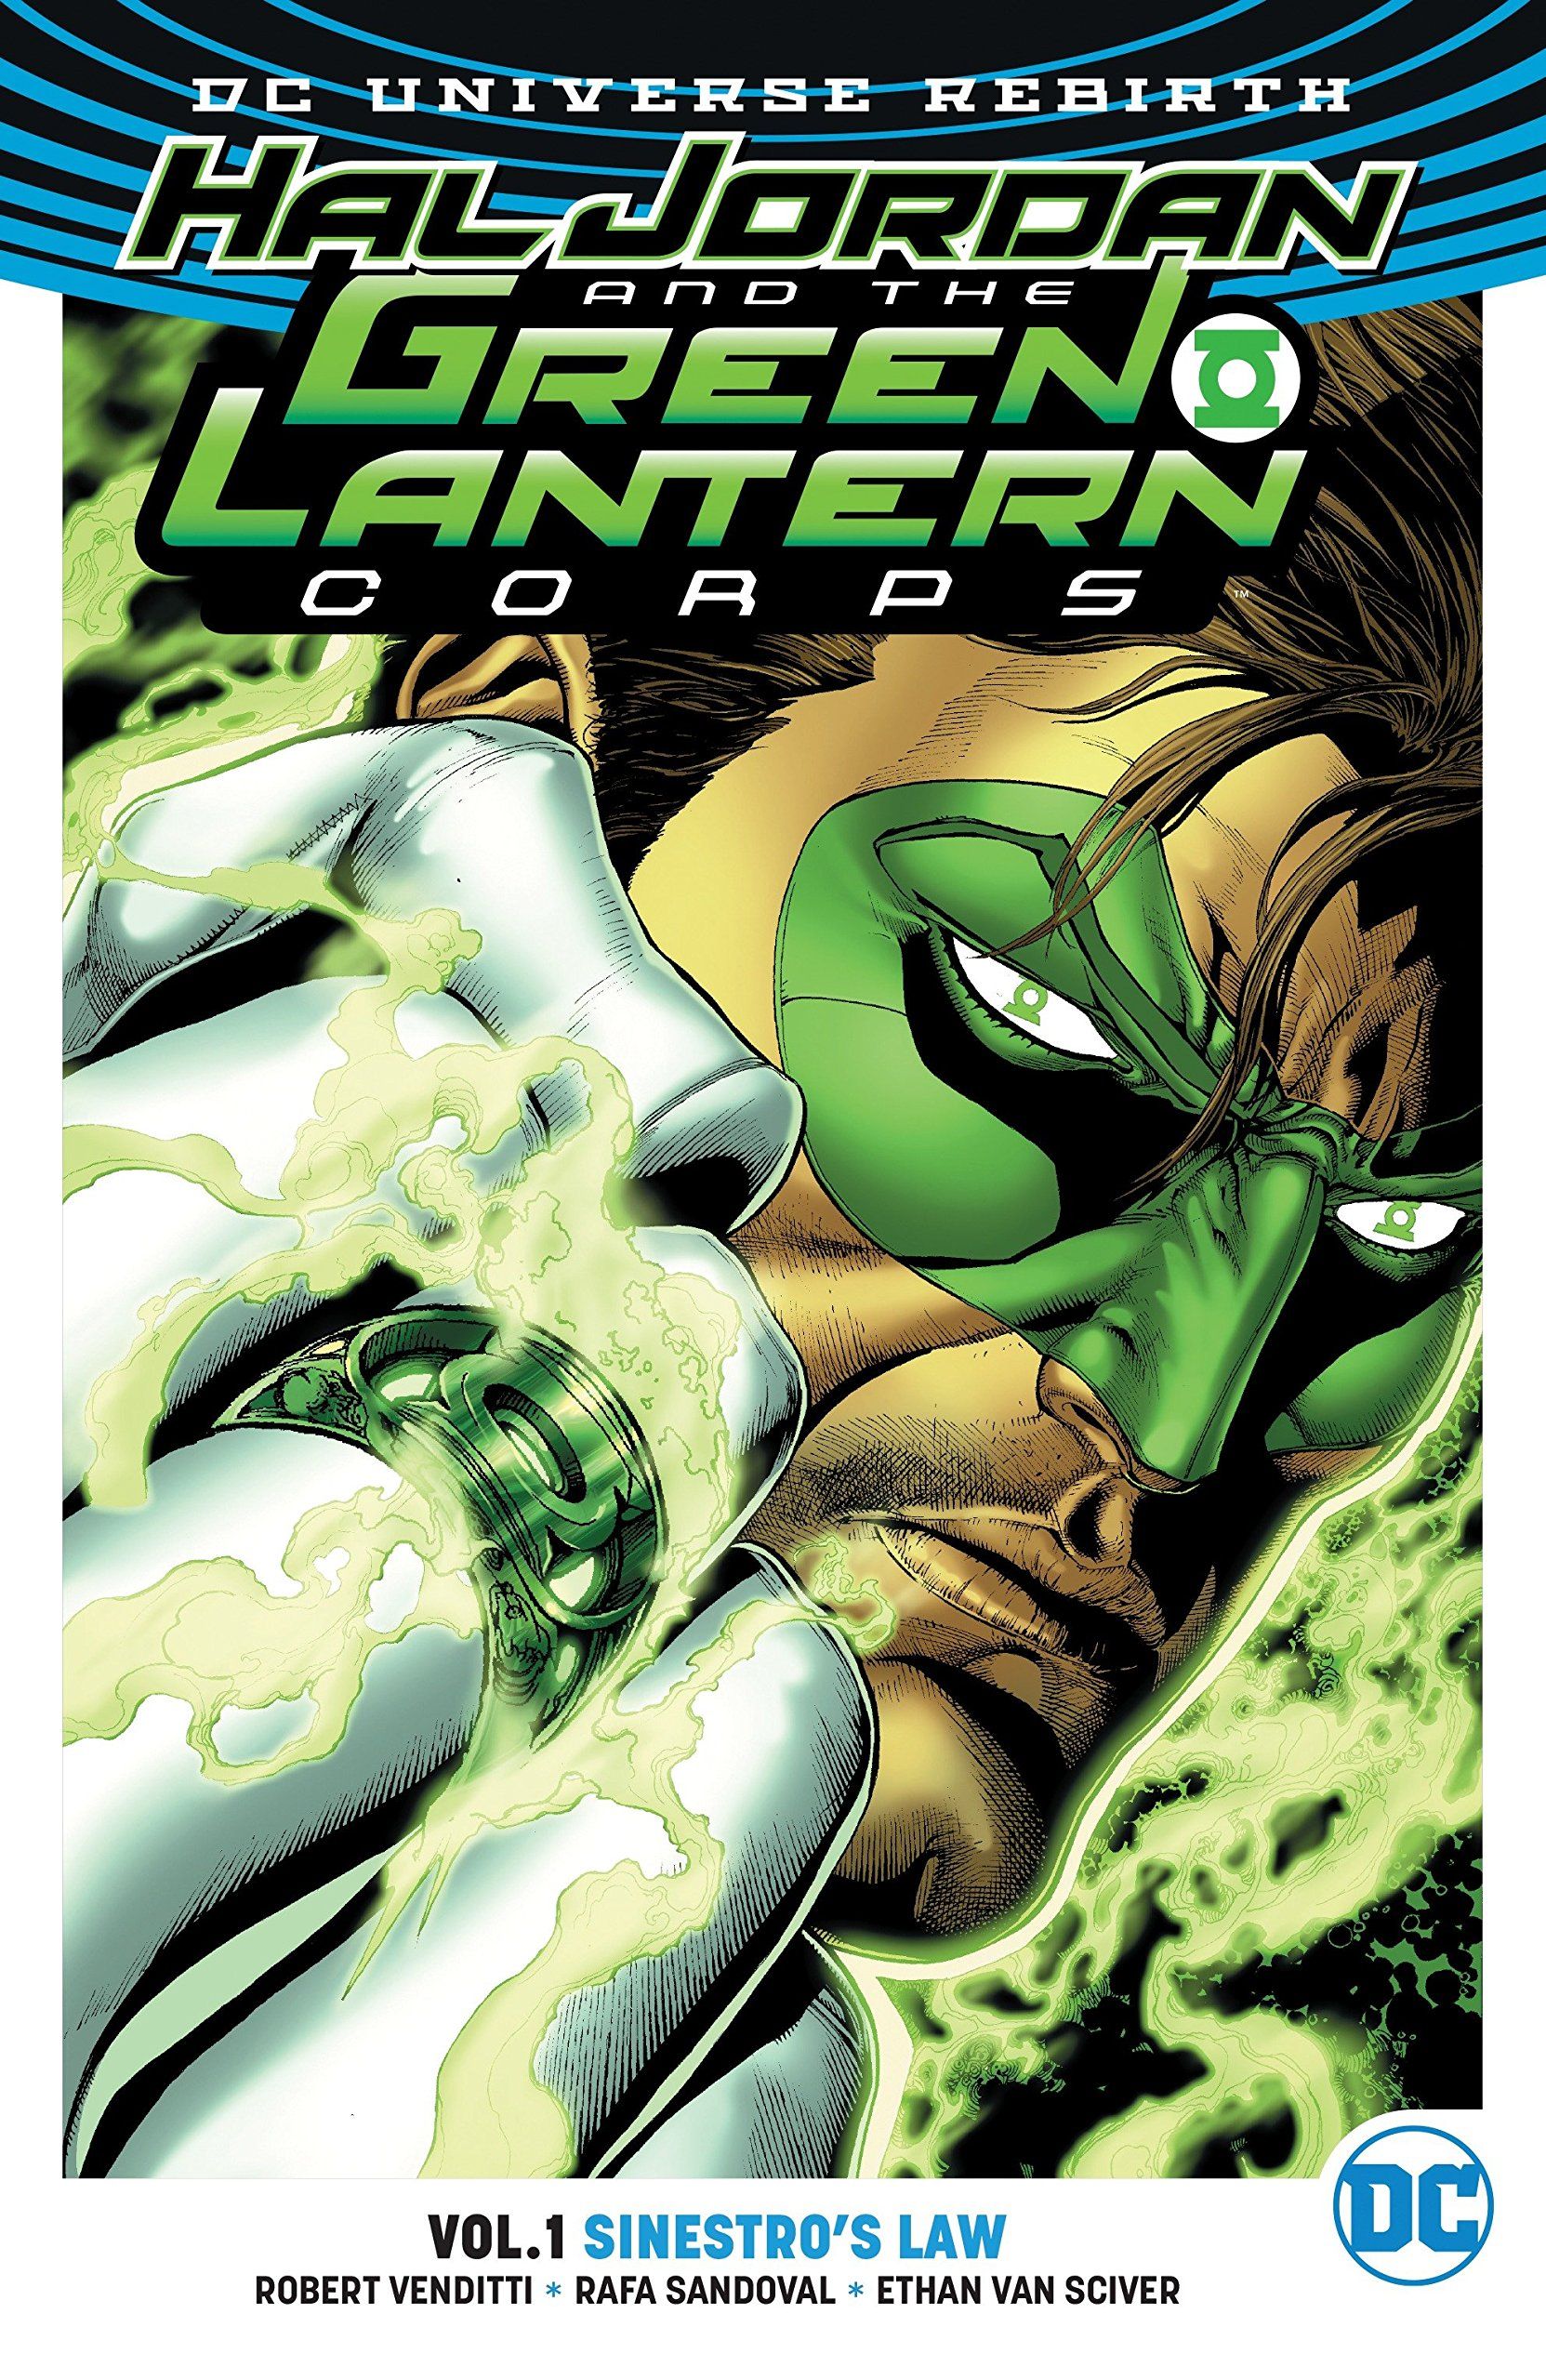 Hal Jordan and the Green Lantern Corps Vol. 1: Sinestro's Law (Rebirth) (Green Lantern Jordan and the Green Lantern Corps (Rebi): Venditti, Robert, Sandoval, Rafa, Van Sciver, Ethan: Books